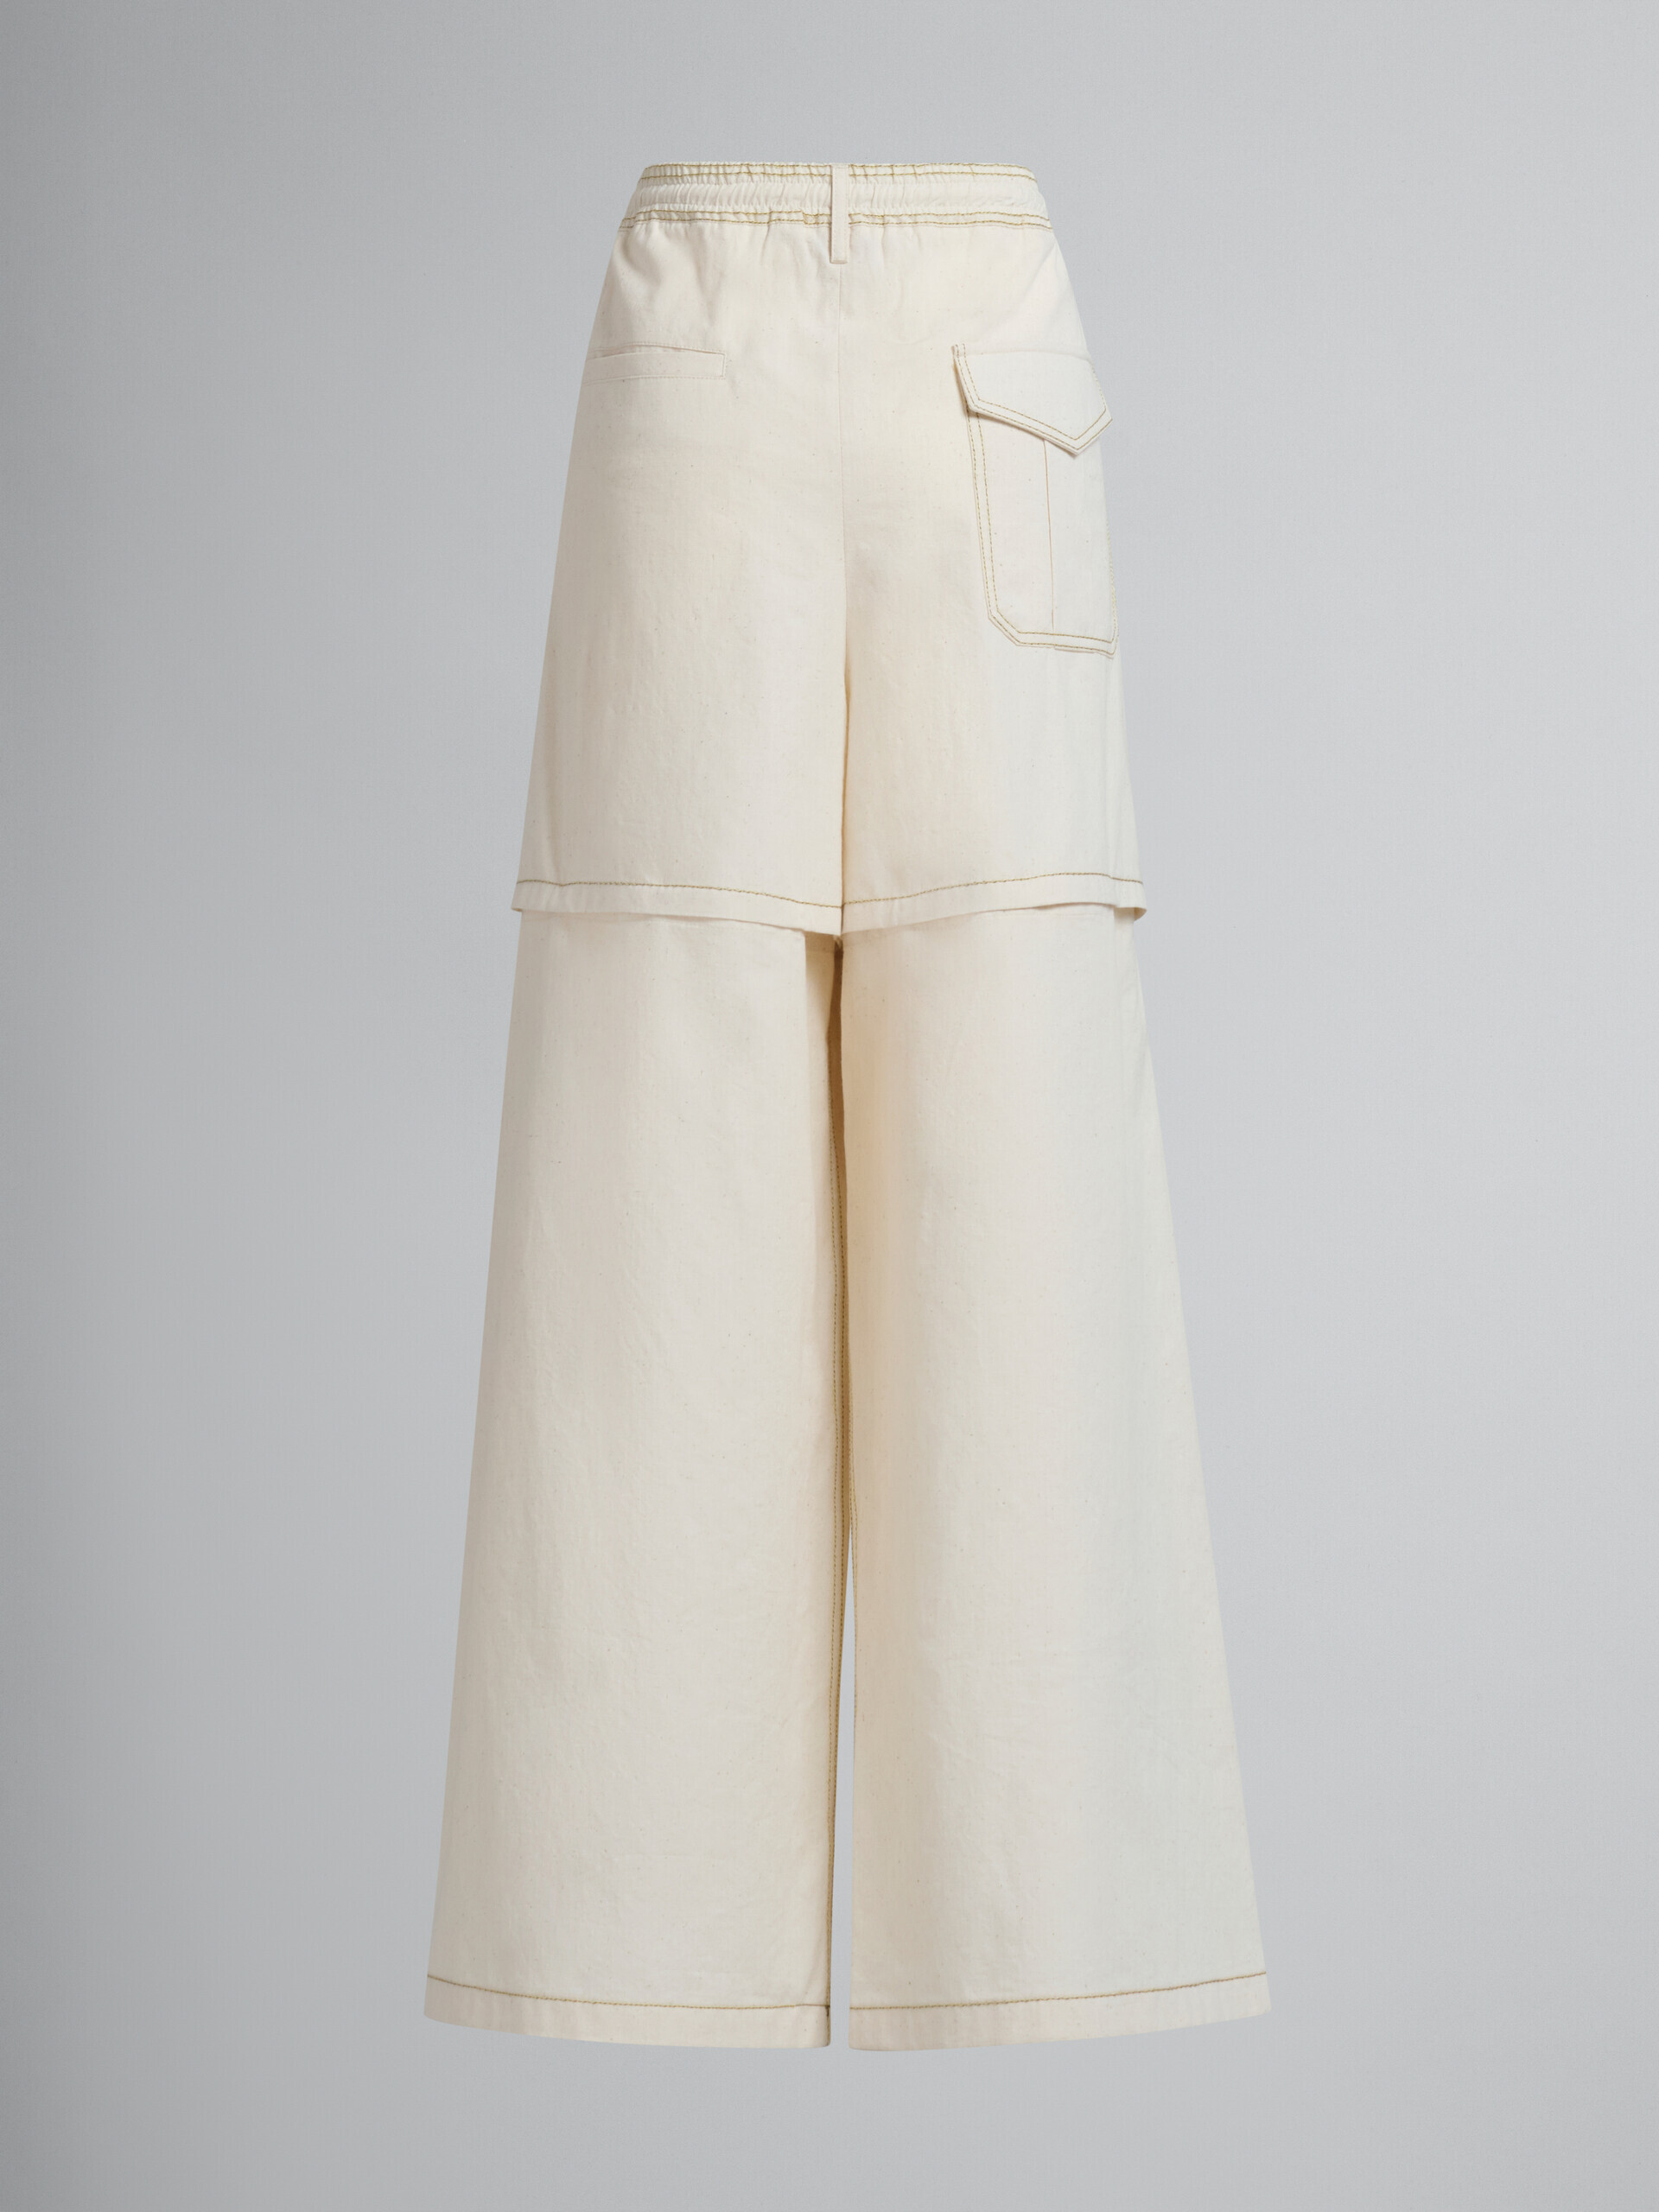 Light beige organic toile hybrid cargo pants with Marni mending - Pants - Image 3